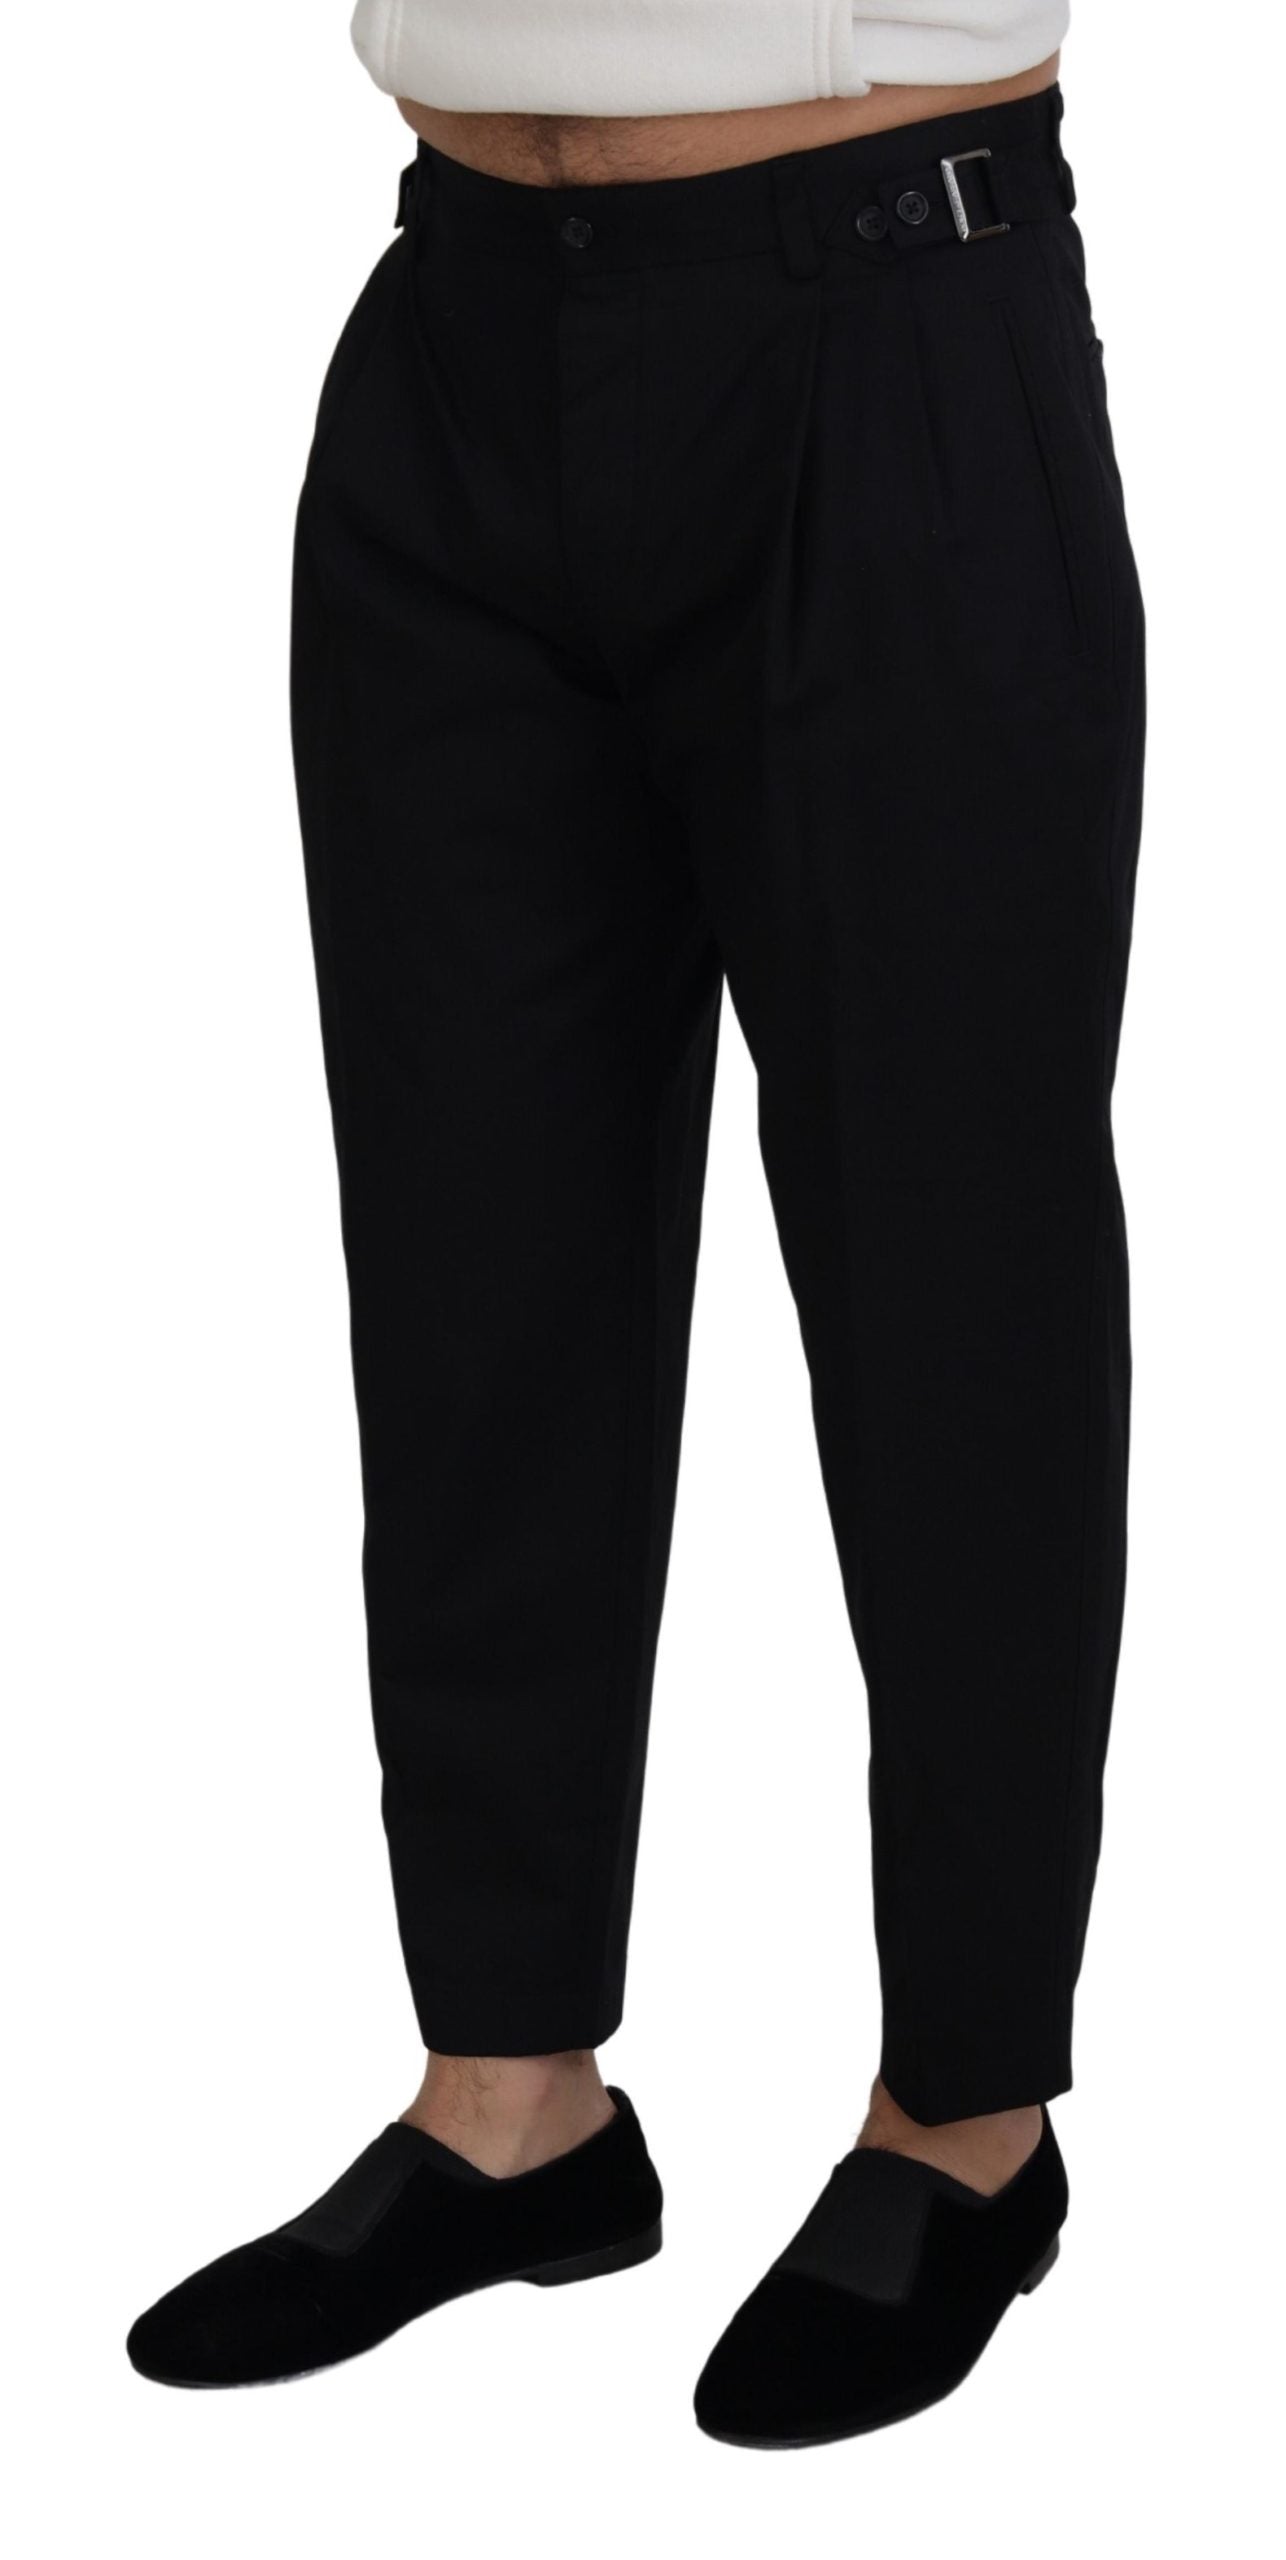 Dolce & Gabbana Sleek Black Italian Designer Pants with Side Buckle